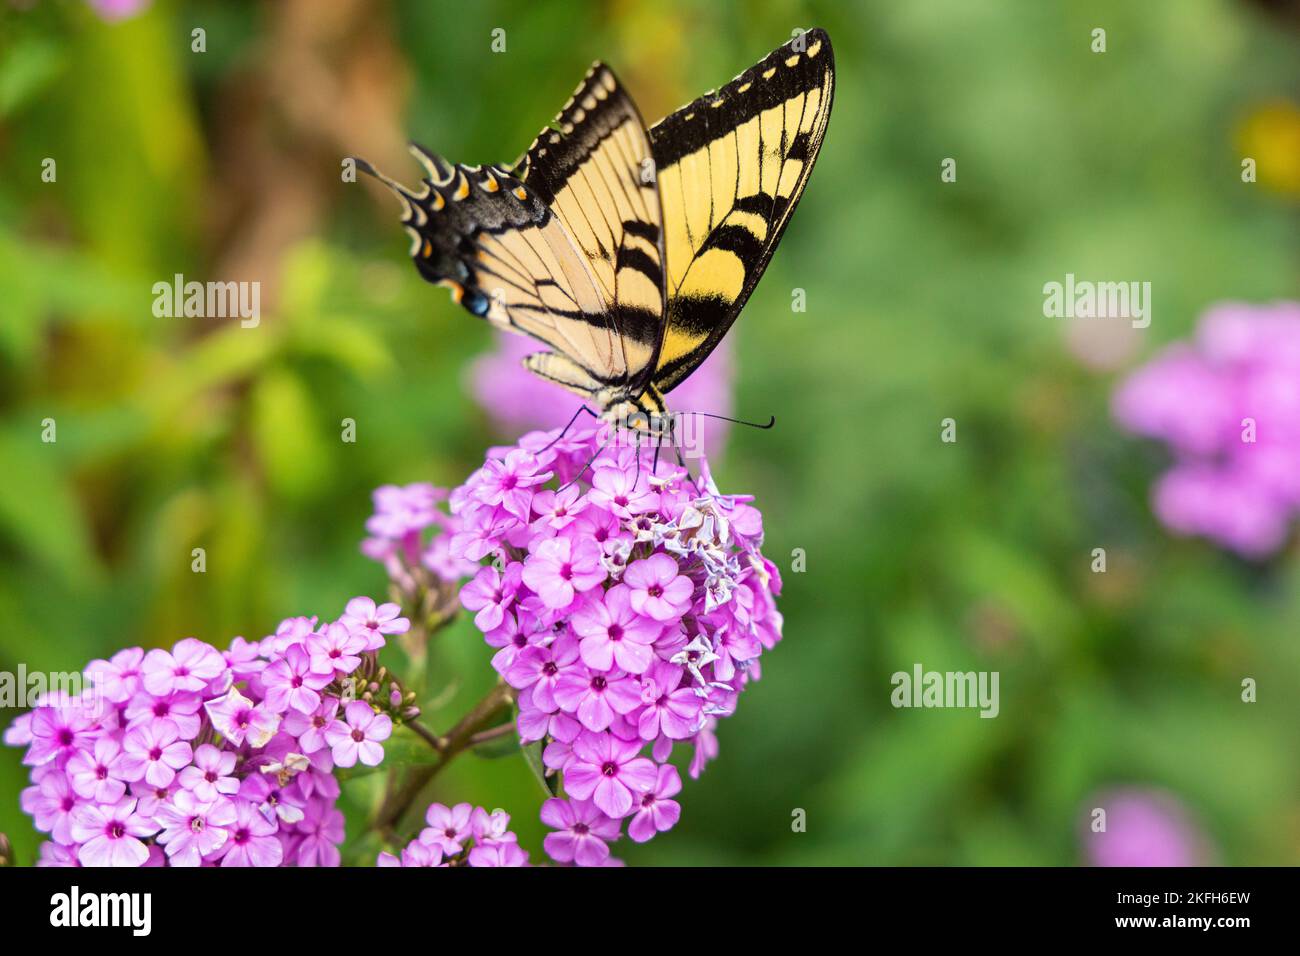 An eastern tiger swallowtail butterfly perching on garden phlox pink flowers Stock Photo